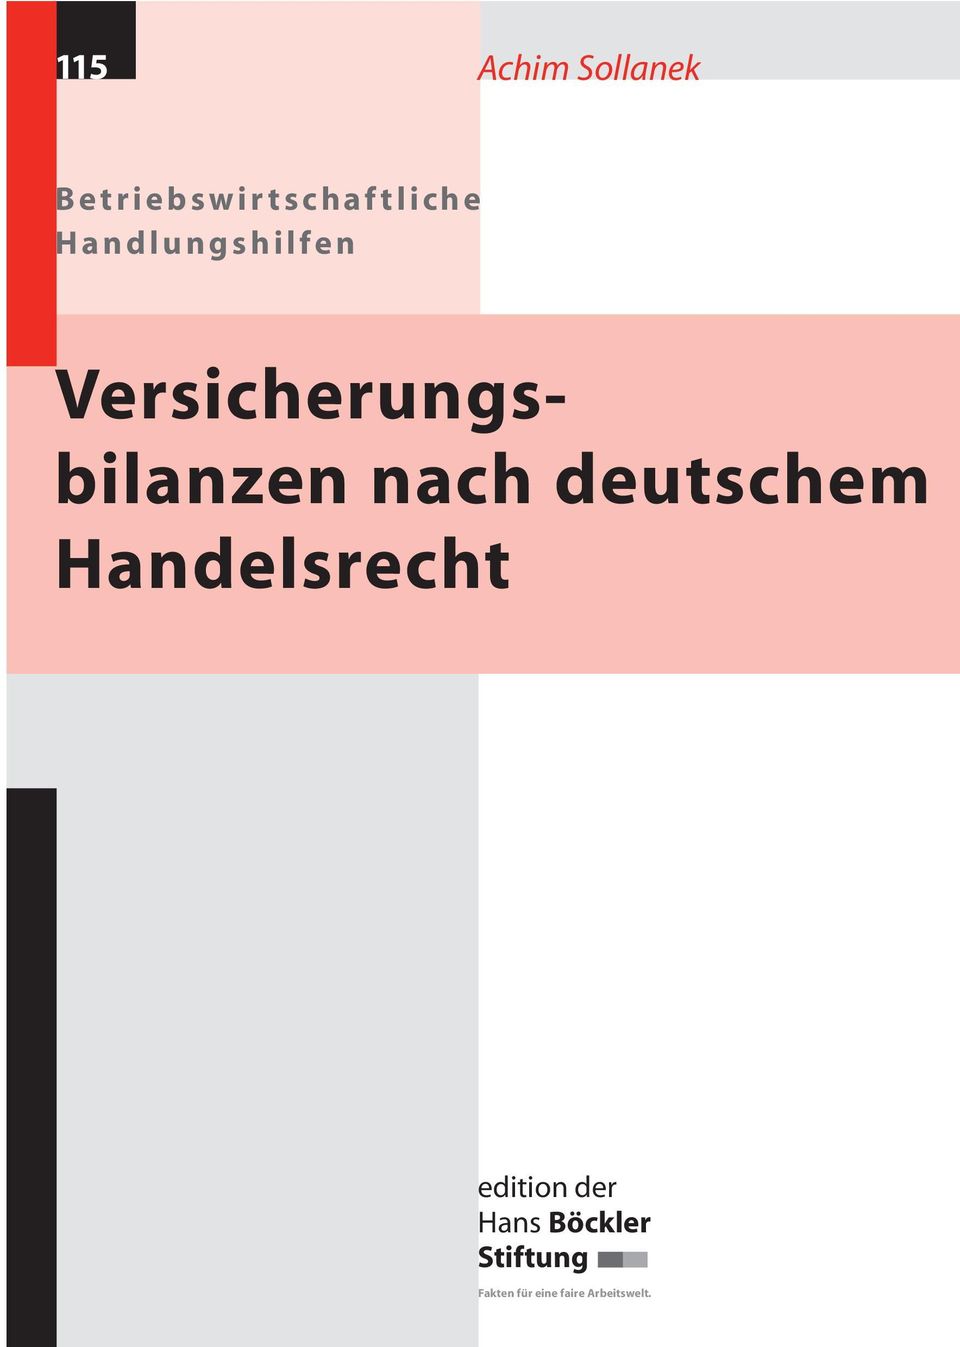 deutschem Handelsrecht edition der Hans